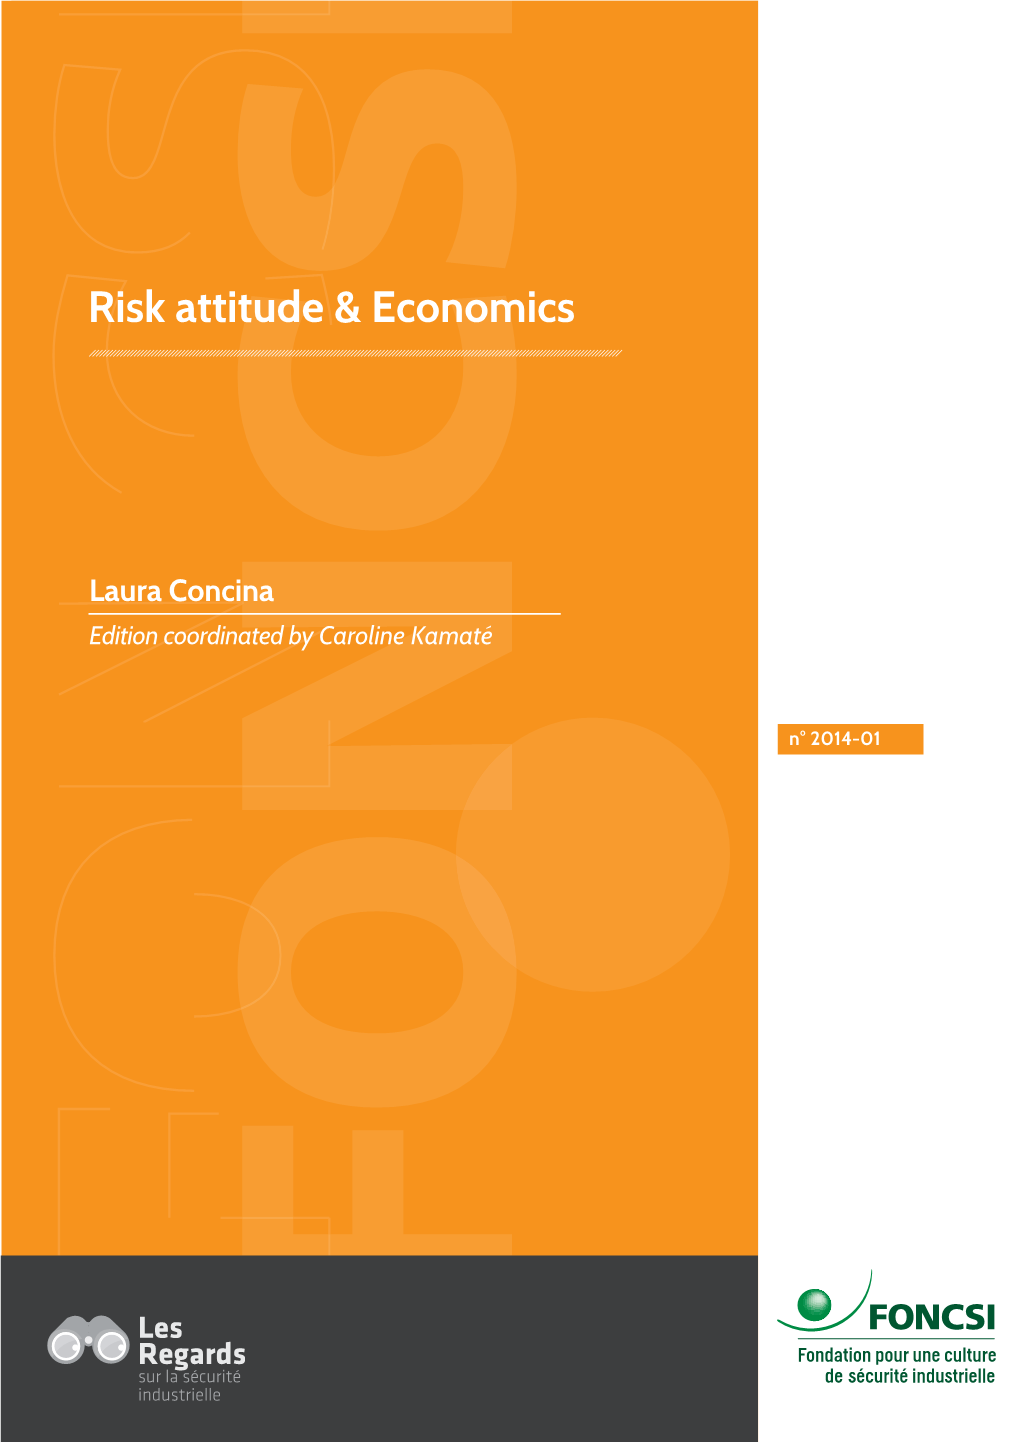 Risk Attitude & Economics